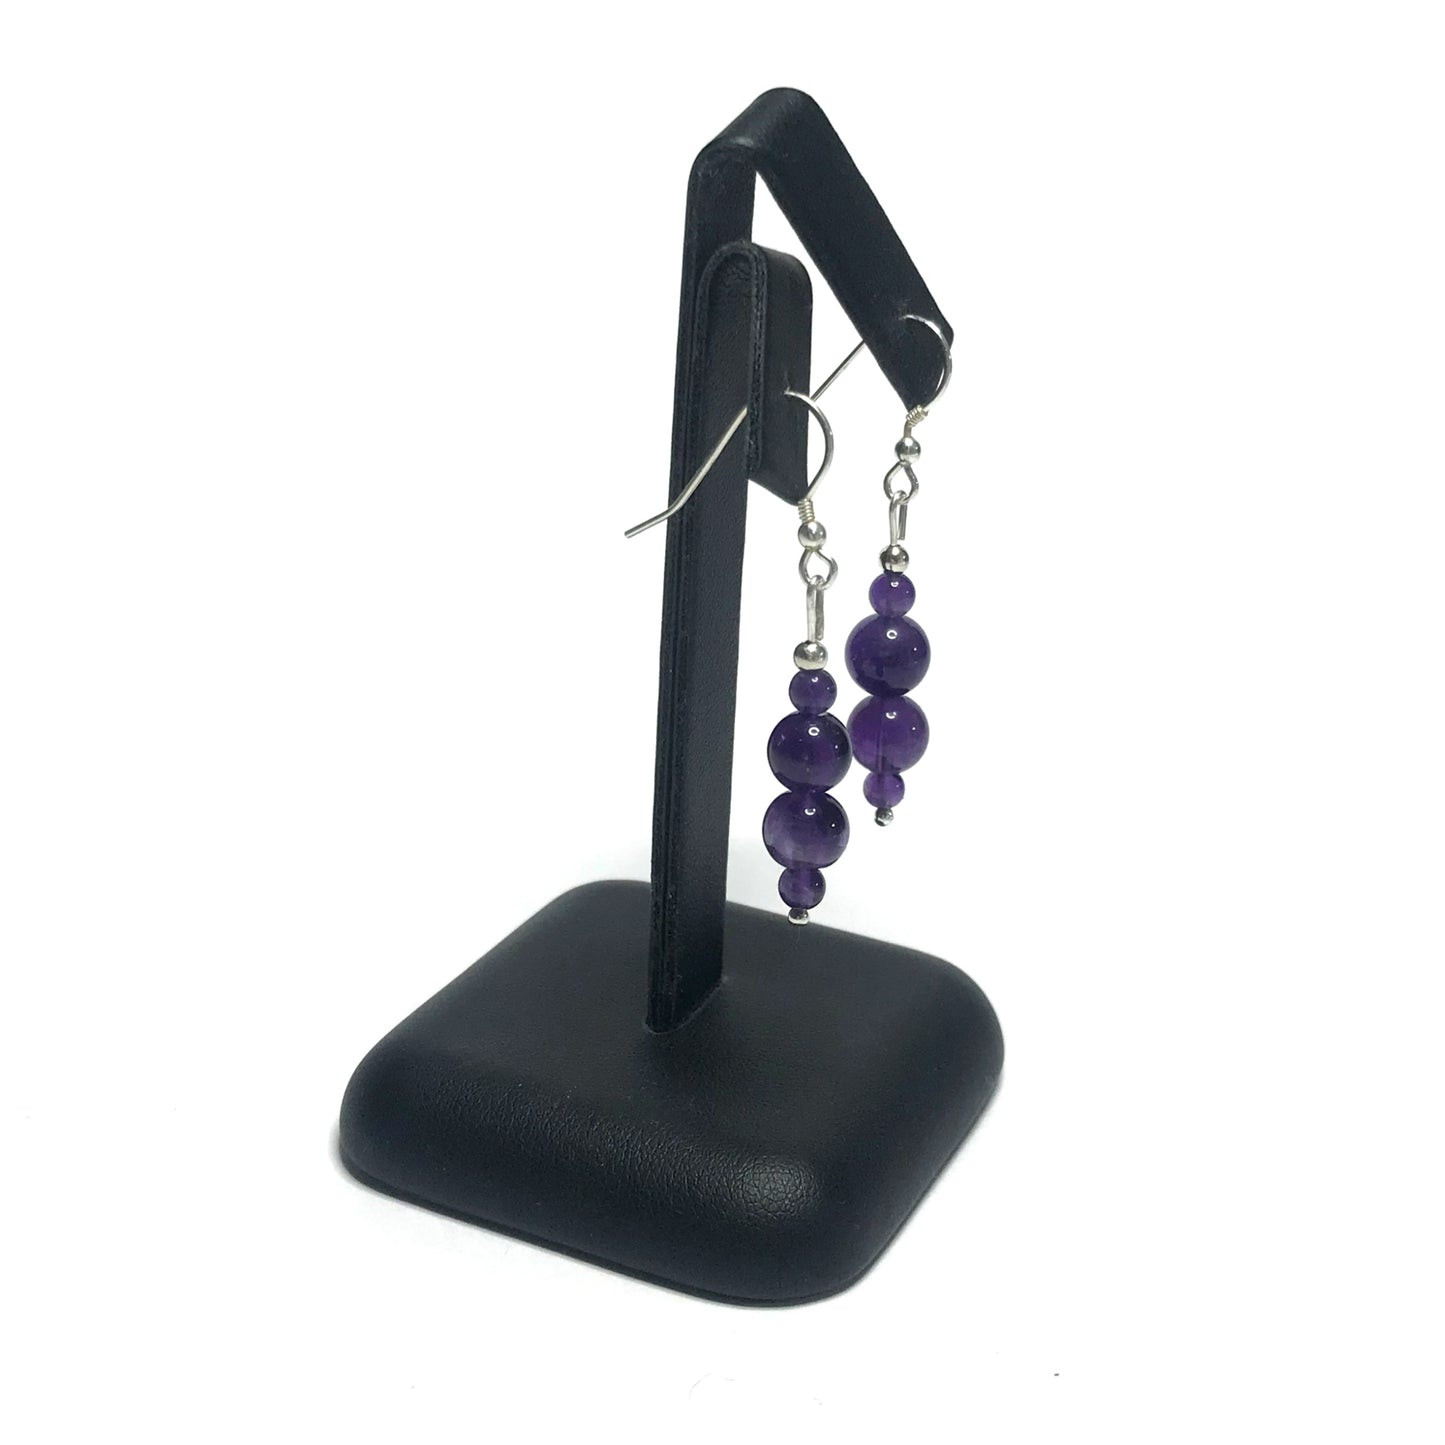 Handmade amethyst bead earrings on a black stand.